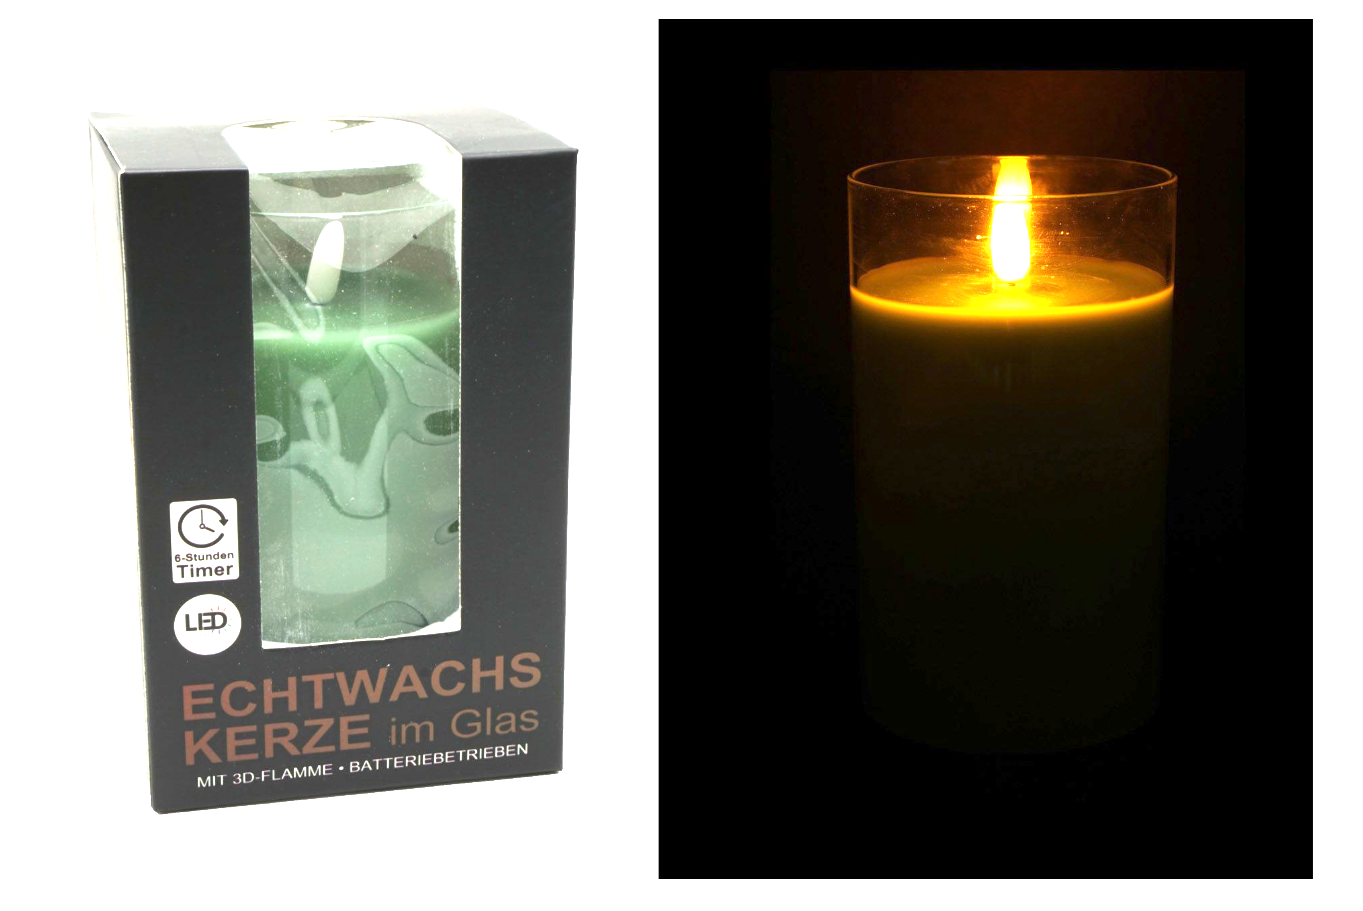 LED Echtwachskerze in Glas "3D Flamme" 7,5x12,5cm 6h Timer, mint, transp. Glas